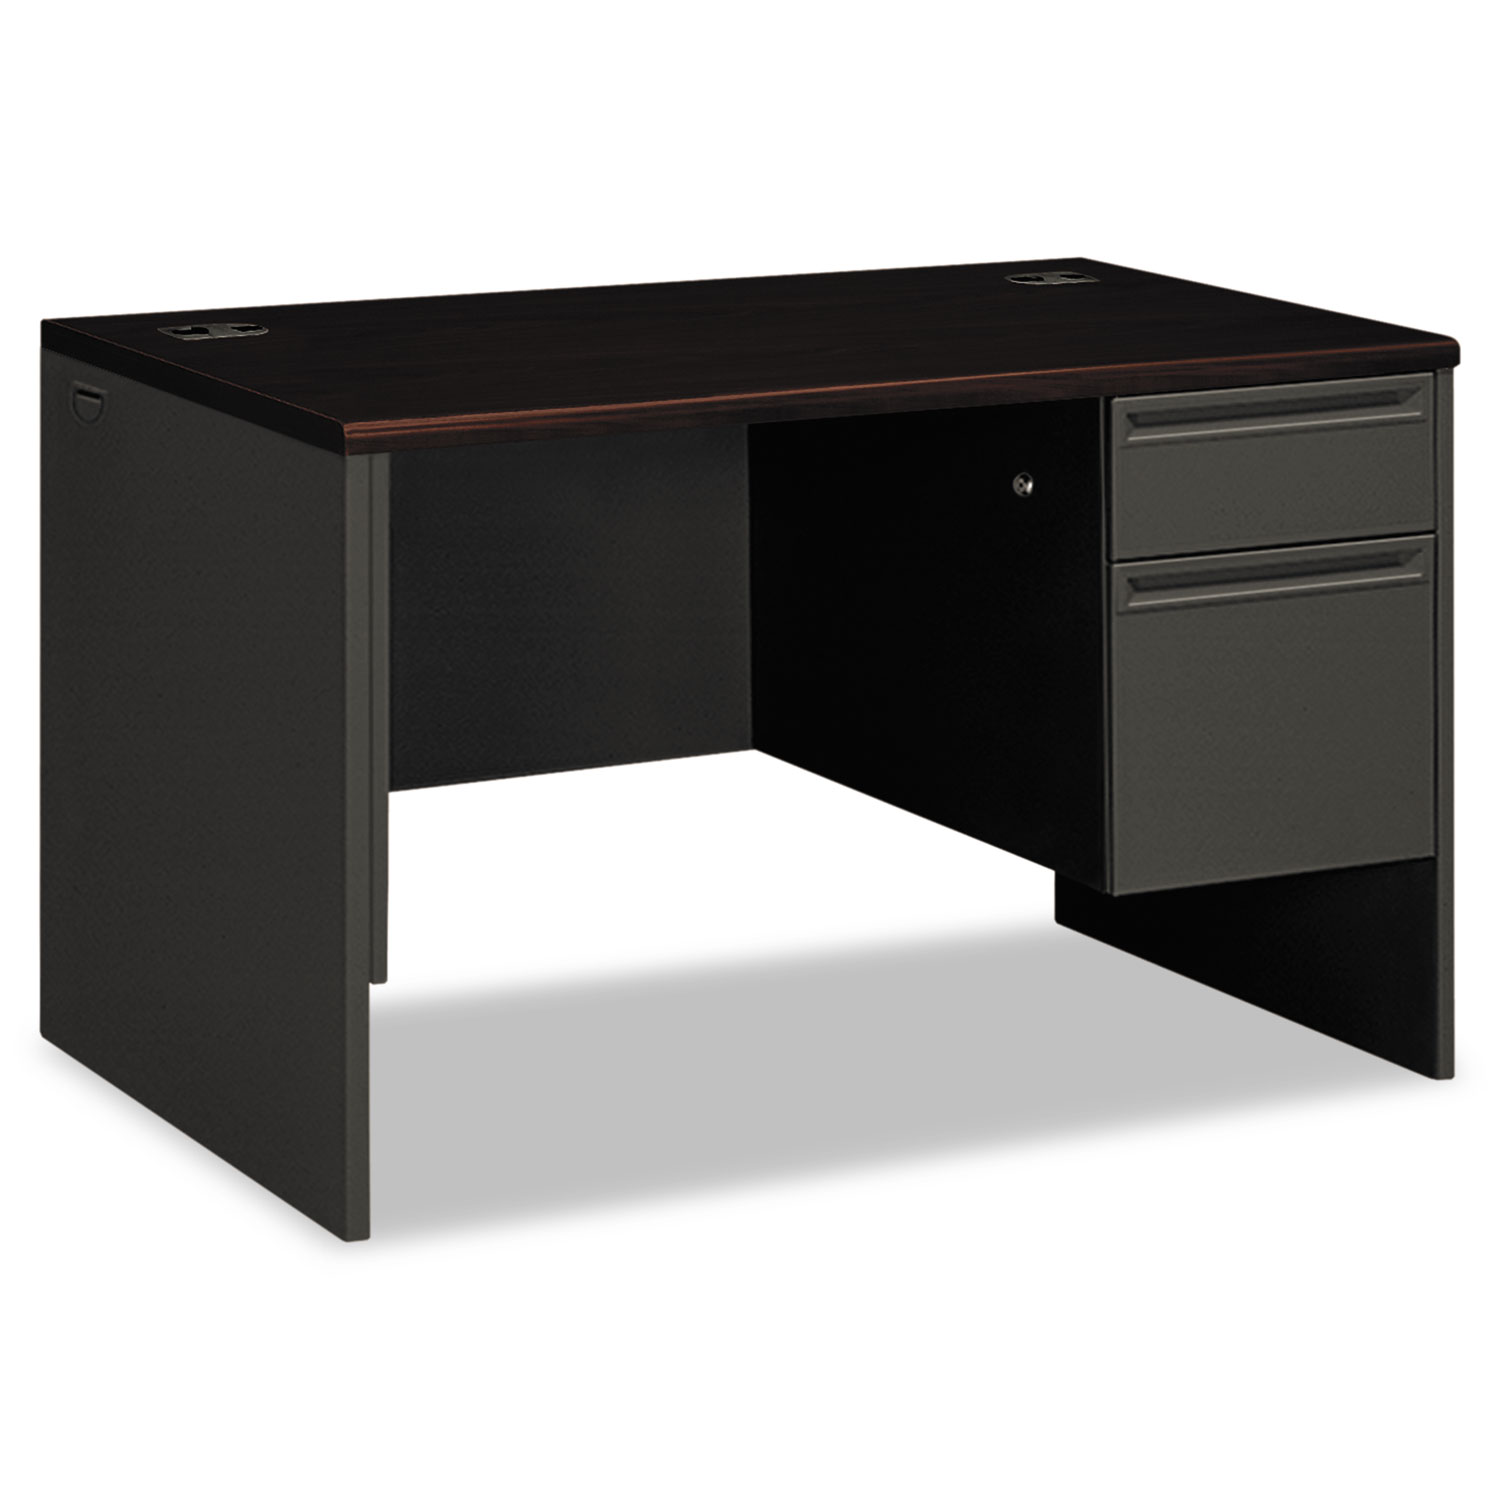  HON H38251.N.S 38000 Series Right Pedestal Desk, 48w x 30d x 29.5h, Mahogany/Charcoal (HON38251NS) 